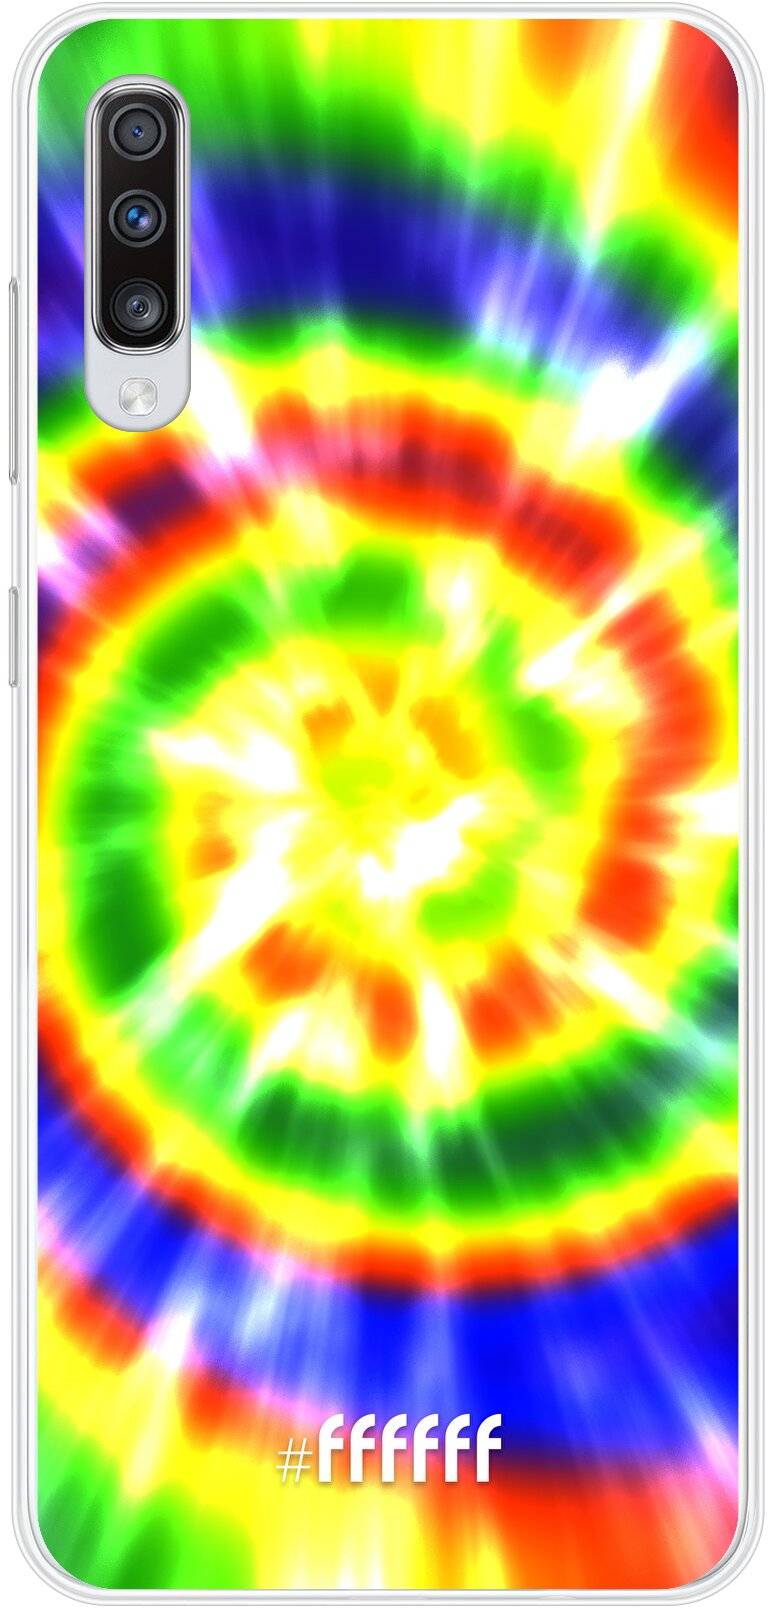 Hippie Tie Dye Galaxy A70